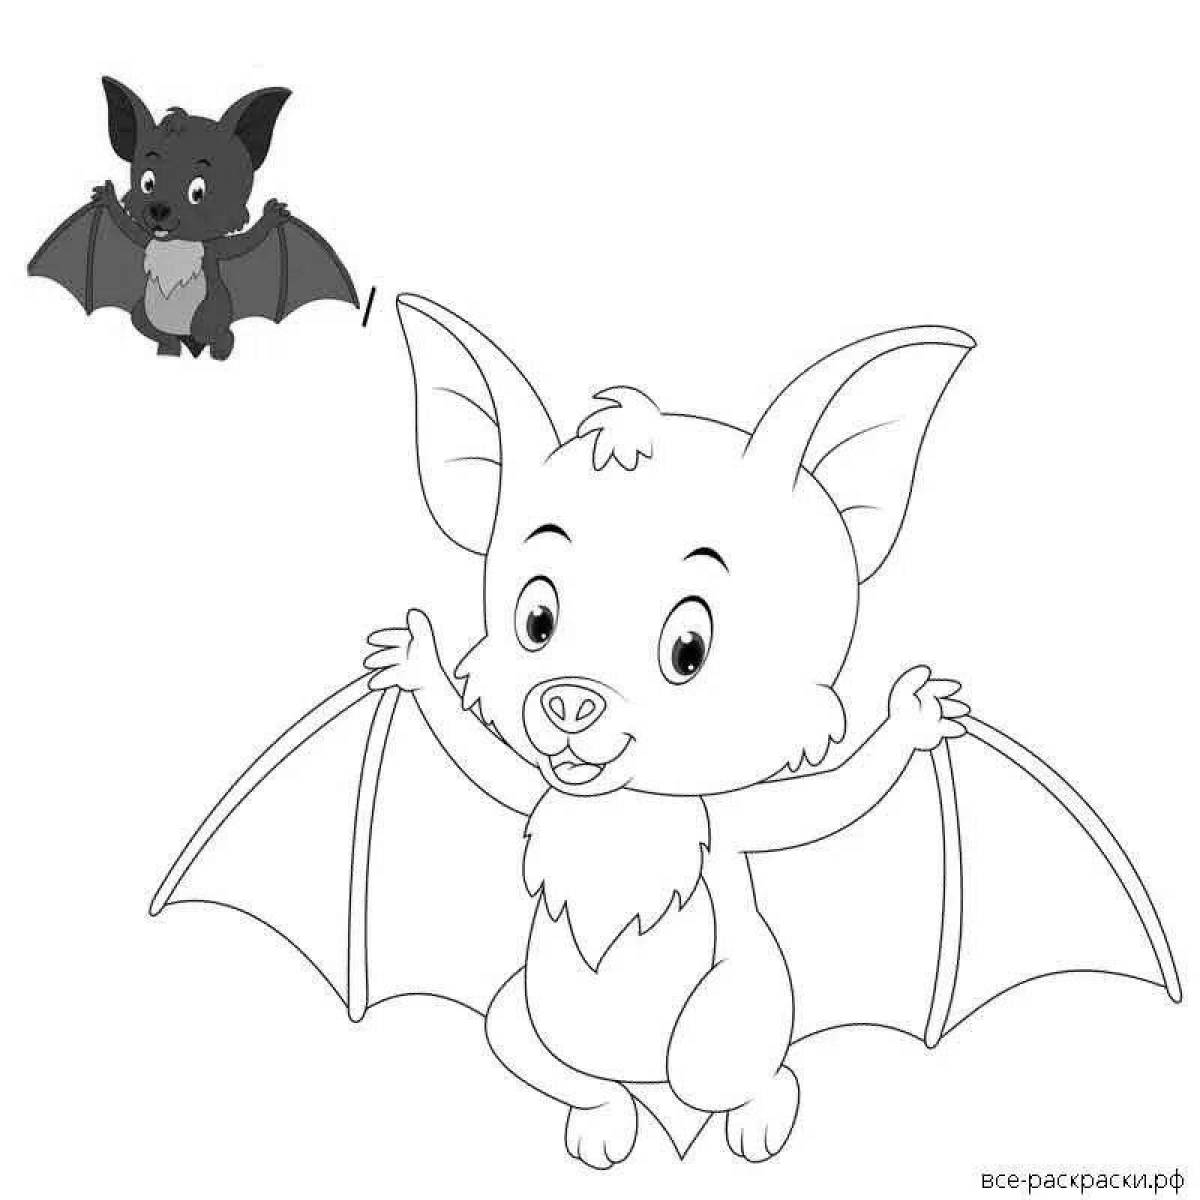 Bat for kids #8